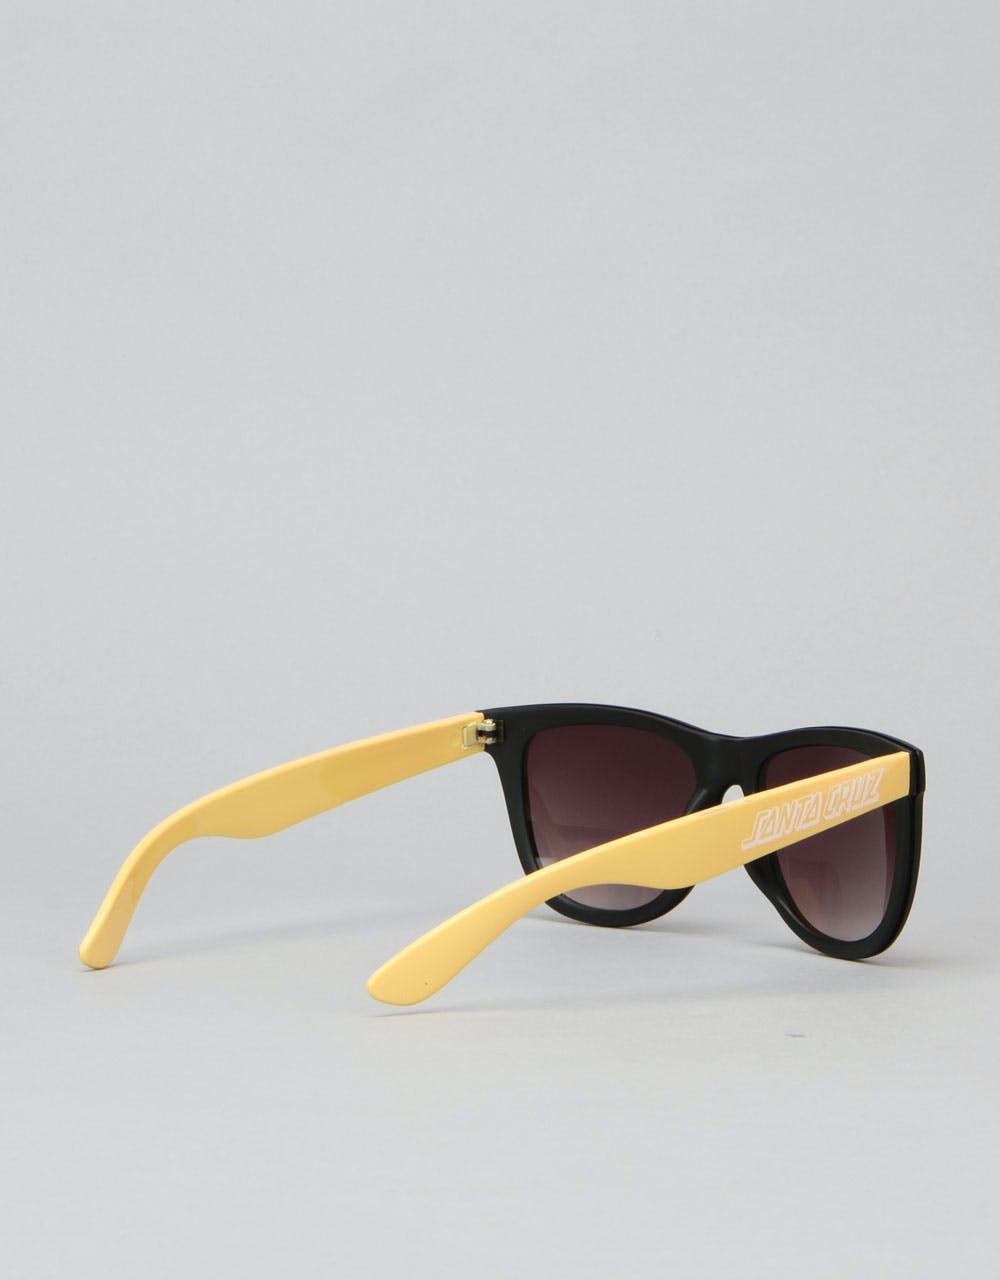 Santa Cruz Capitola Sunglasses - Custard/Black